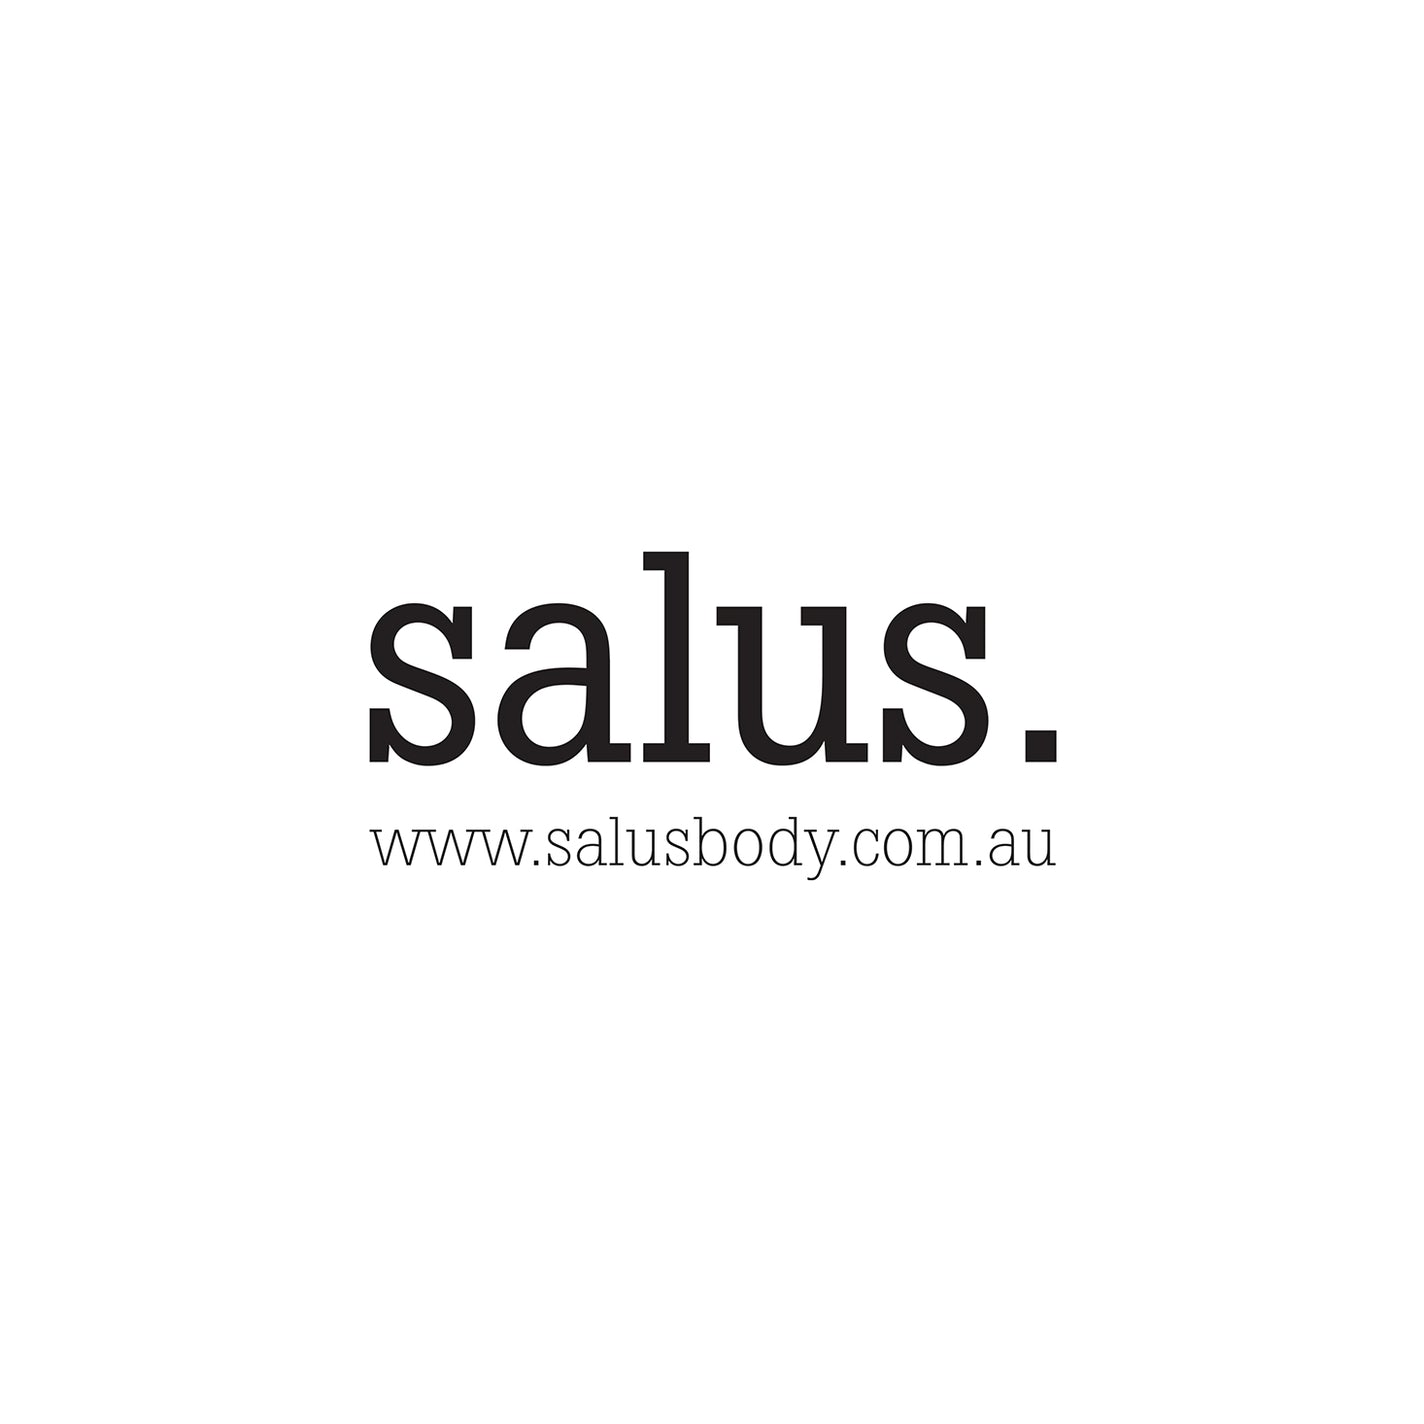 Salus Eucalyptus & Aloe Revitalising Body Wash